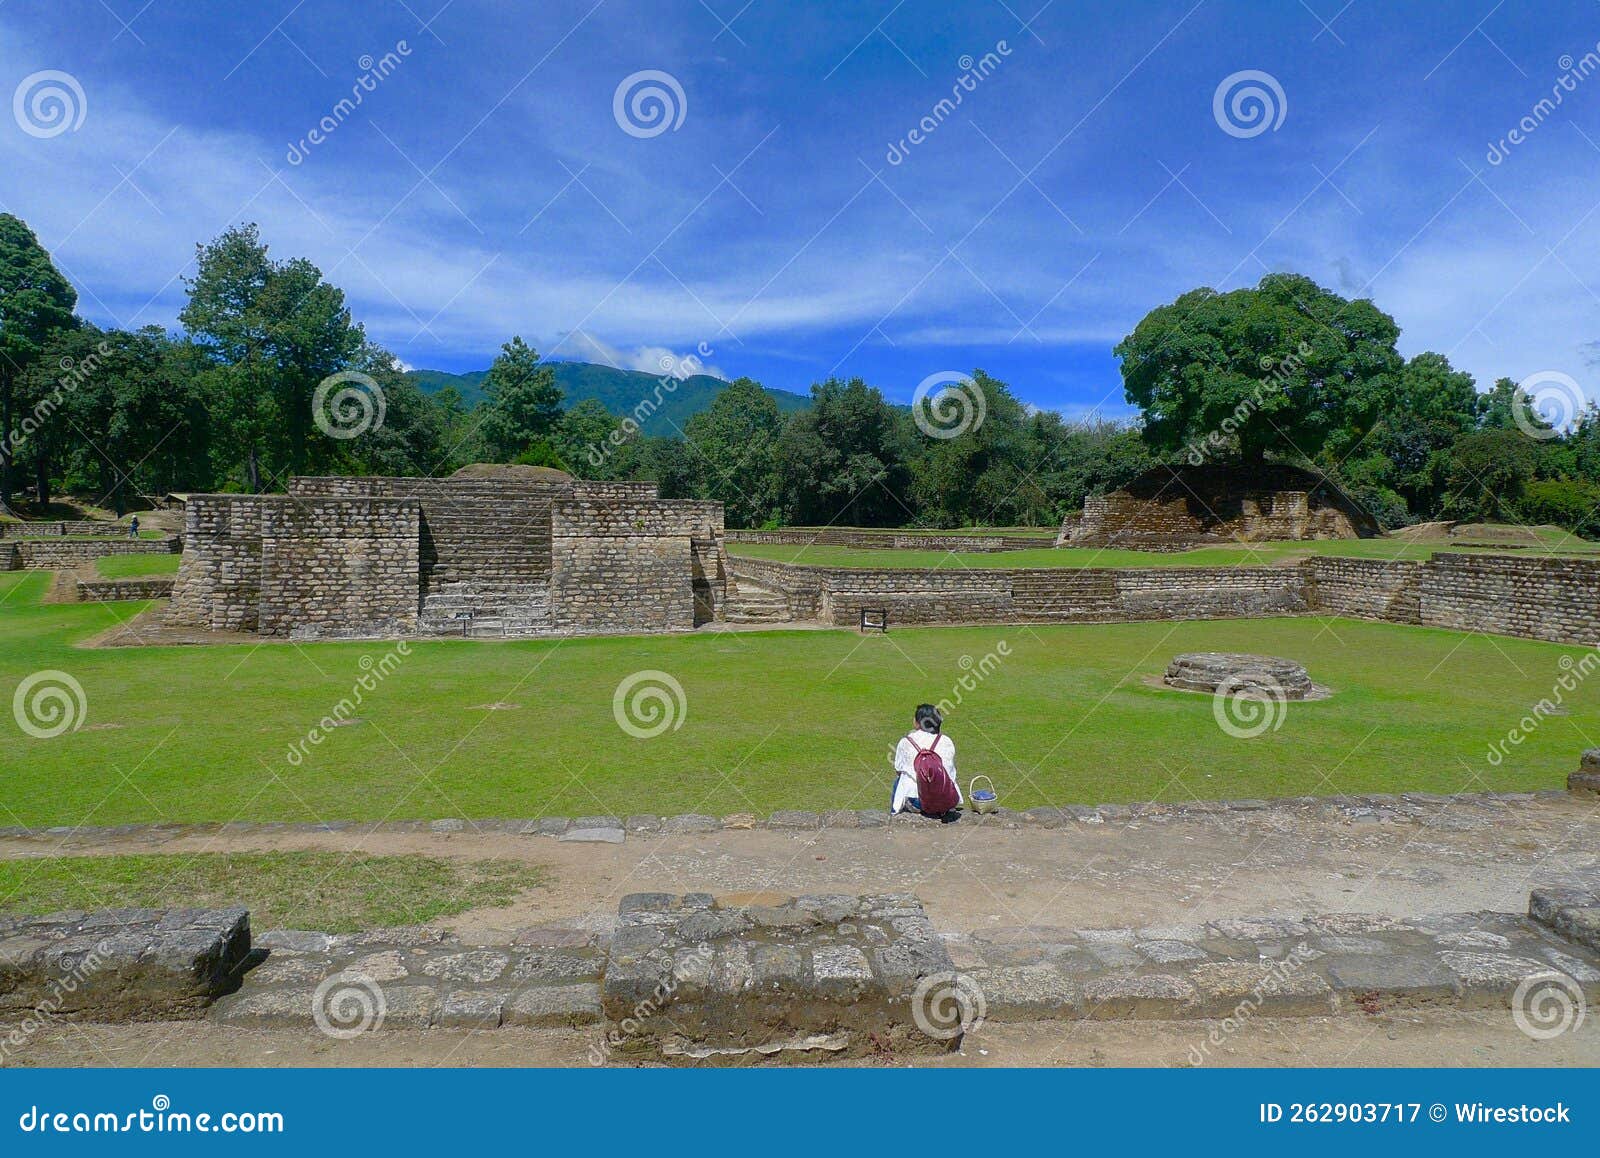 iximche ancient mayan ruins